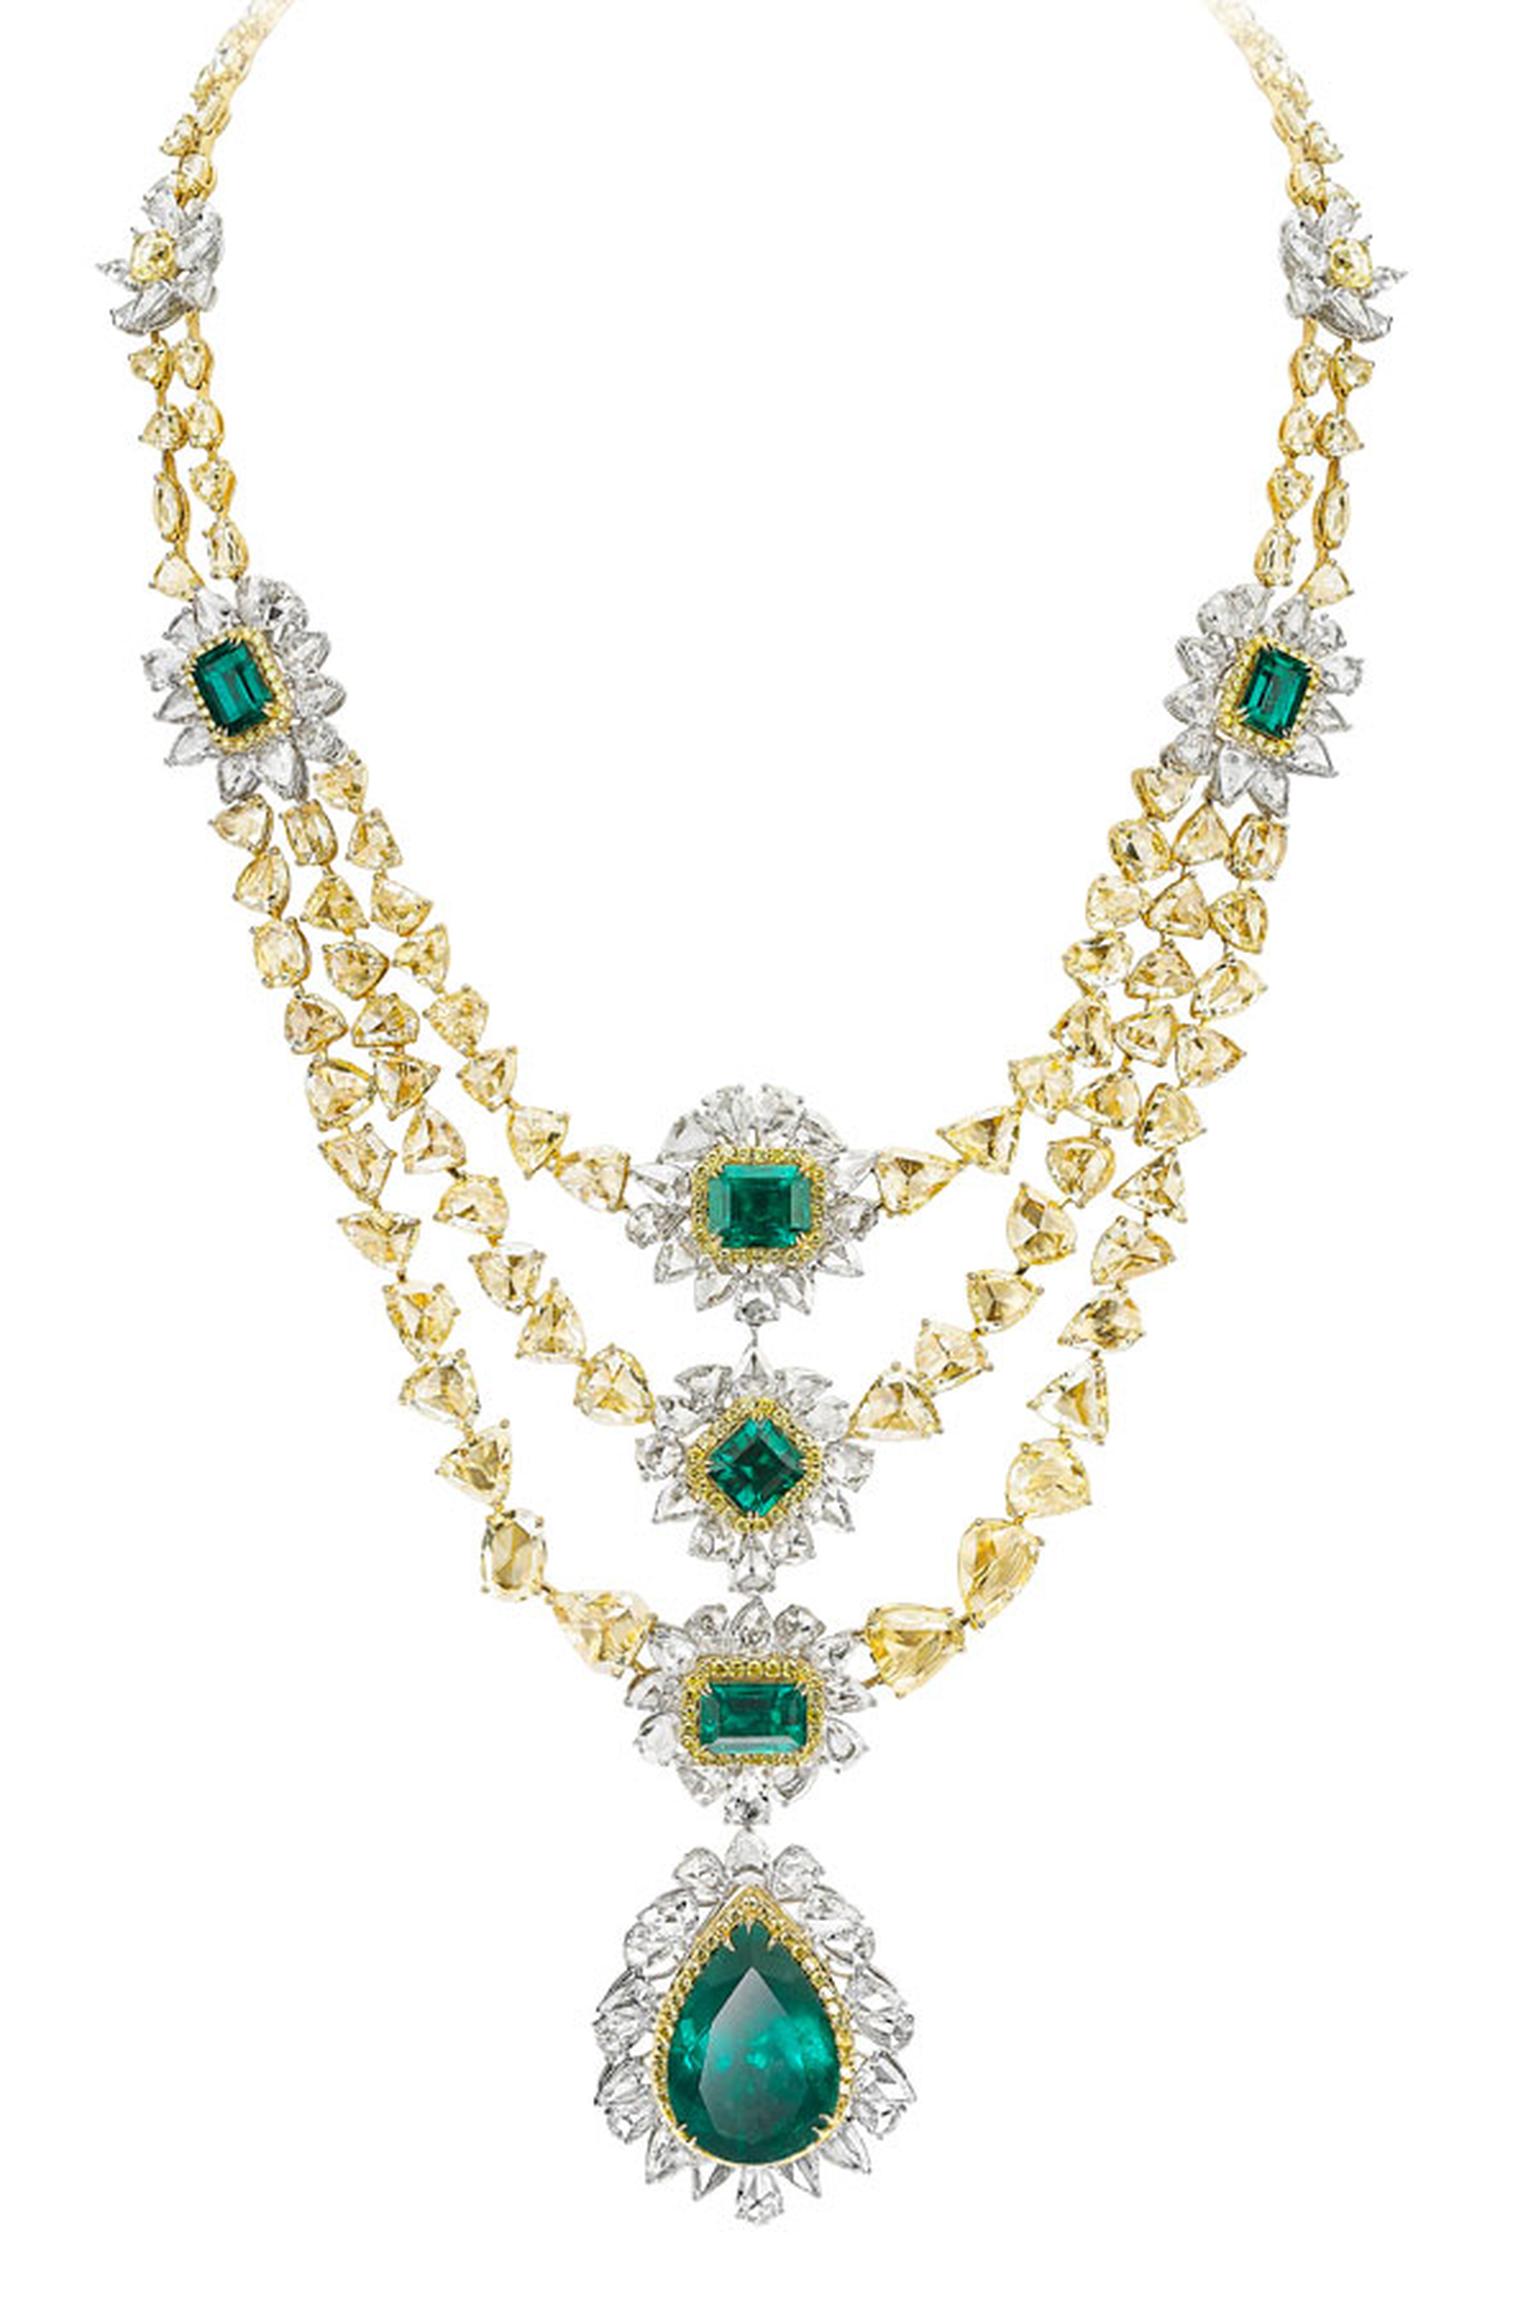 Avakian-yellow-diamond-and-emerald-necklace.jpg